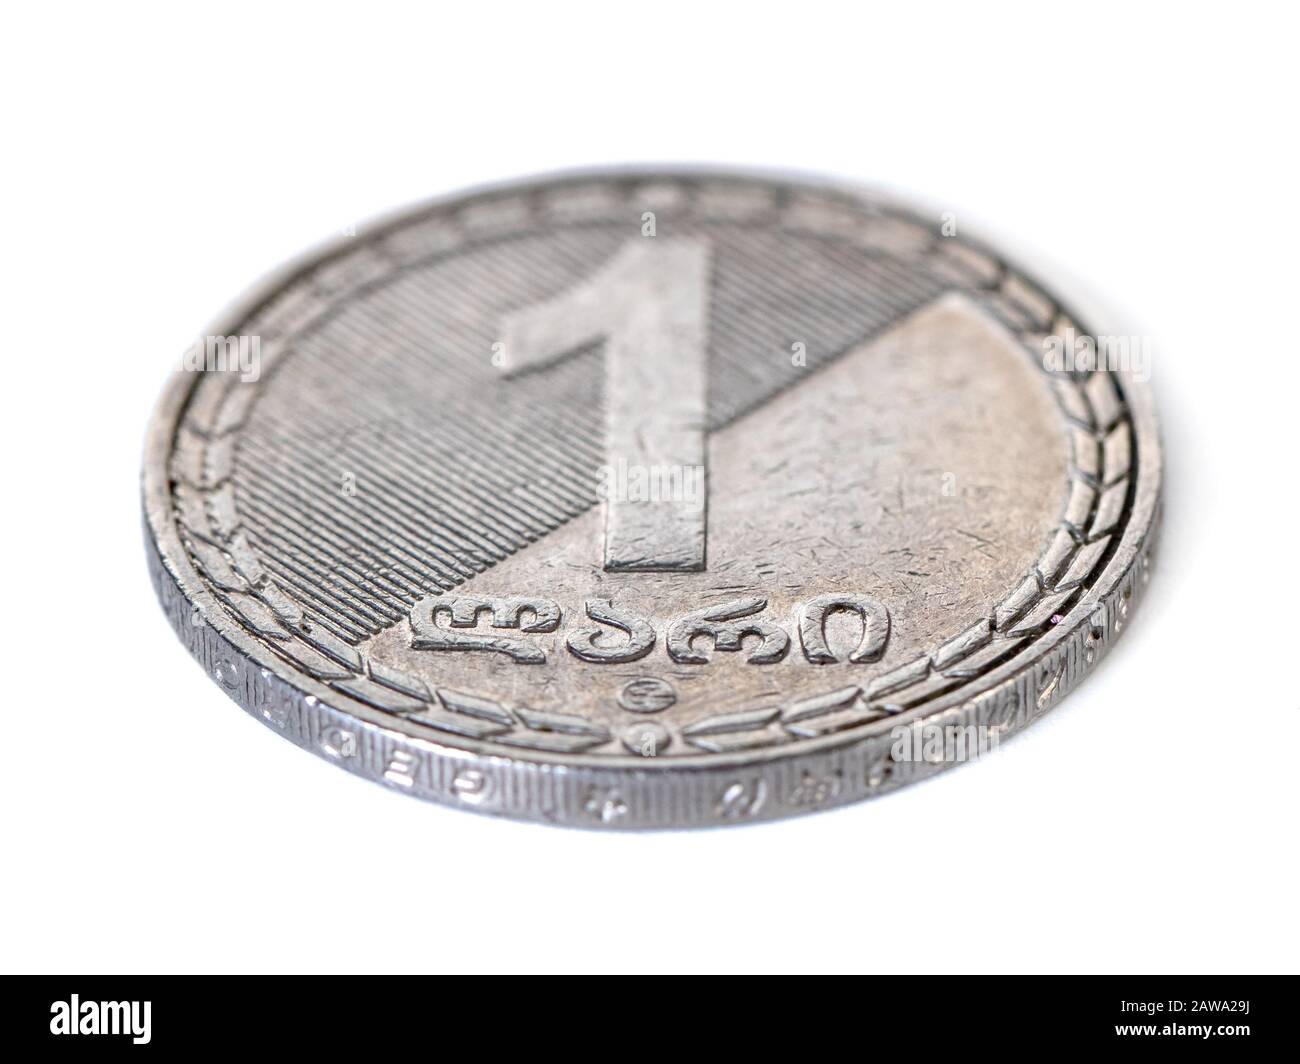 Georgian money lari coin isolated on white Stock Photo